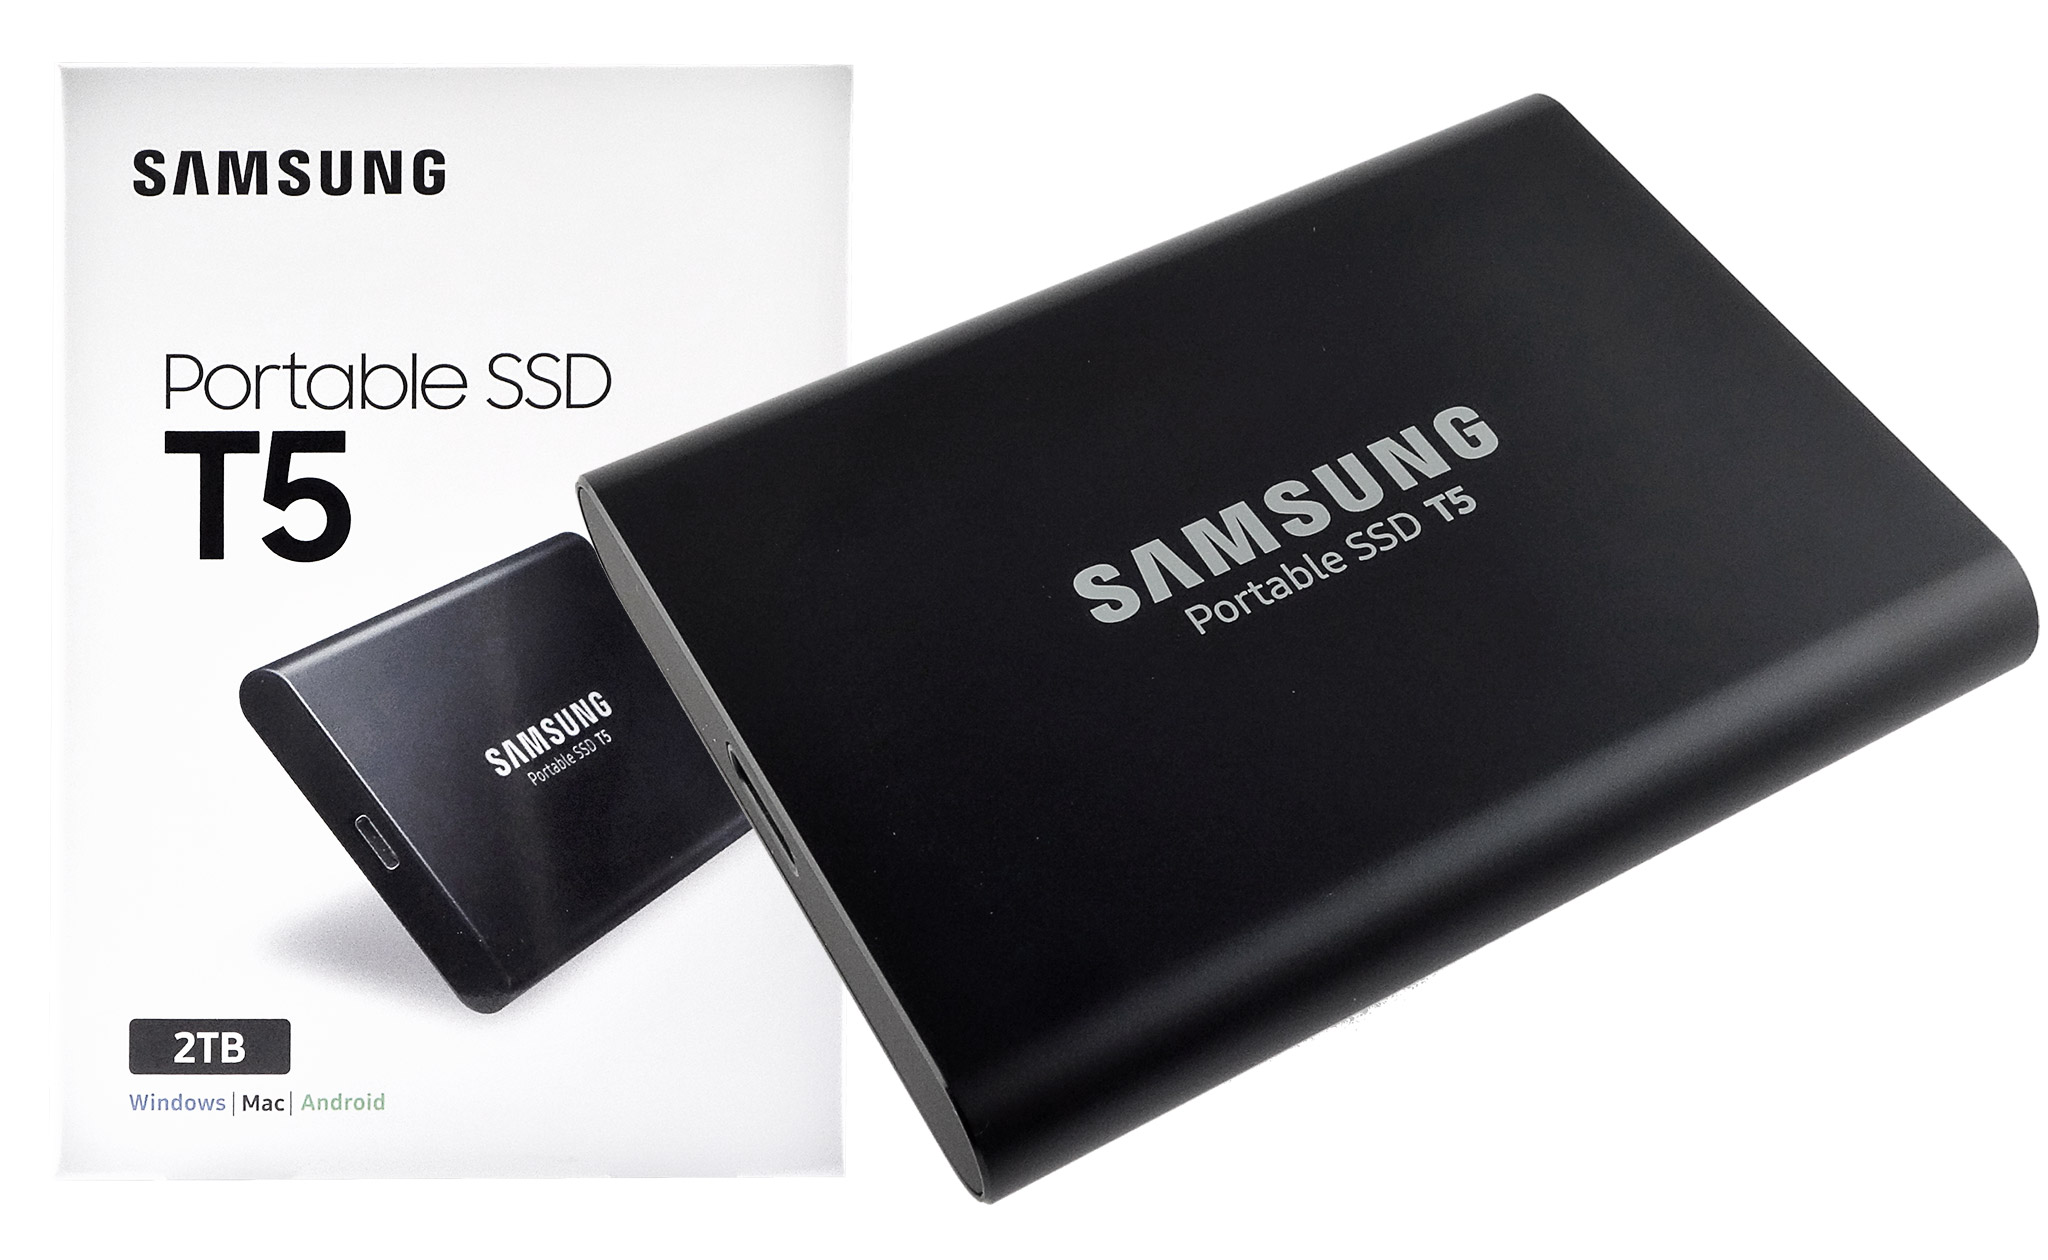 Samsung Portable SSD T5 2TB Review | KitGuru - Part 6